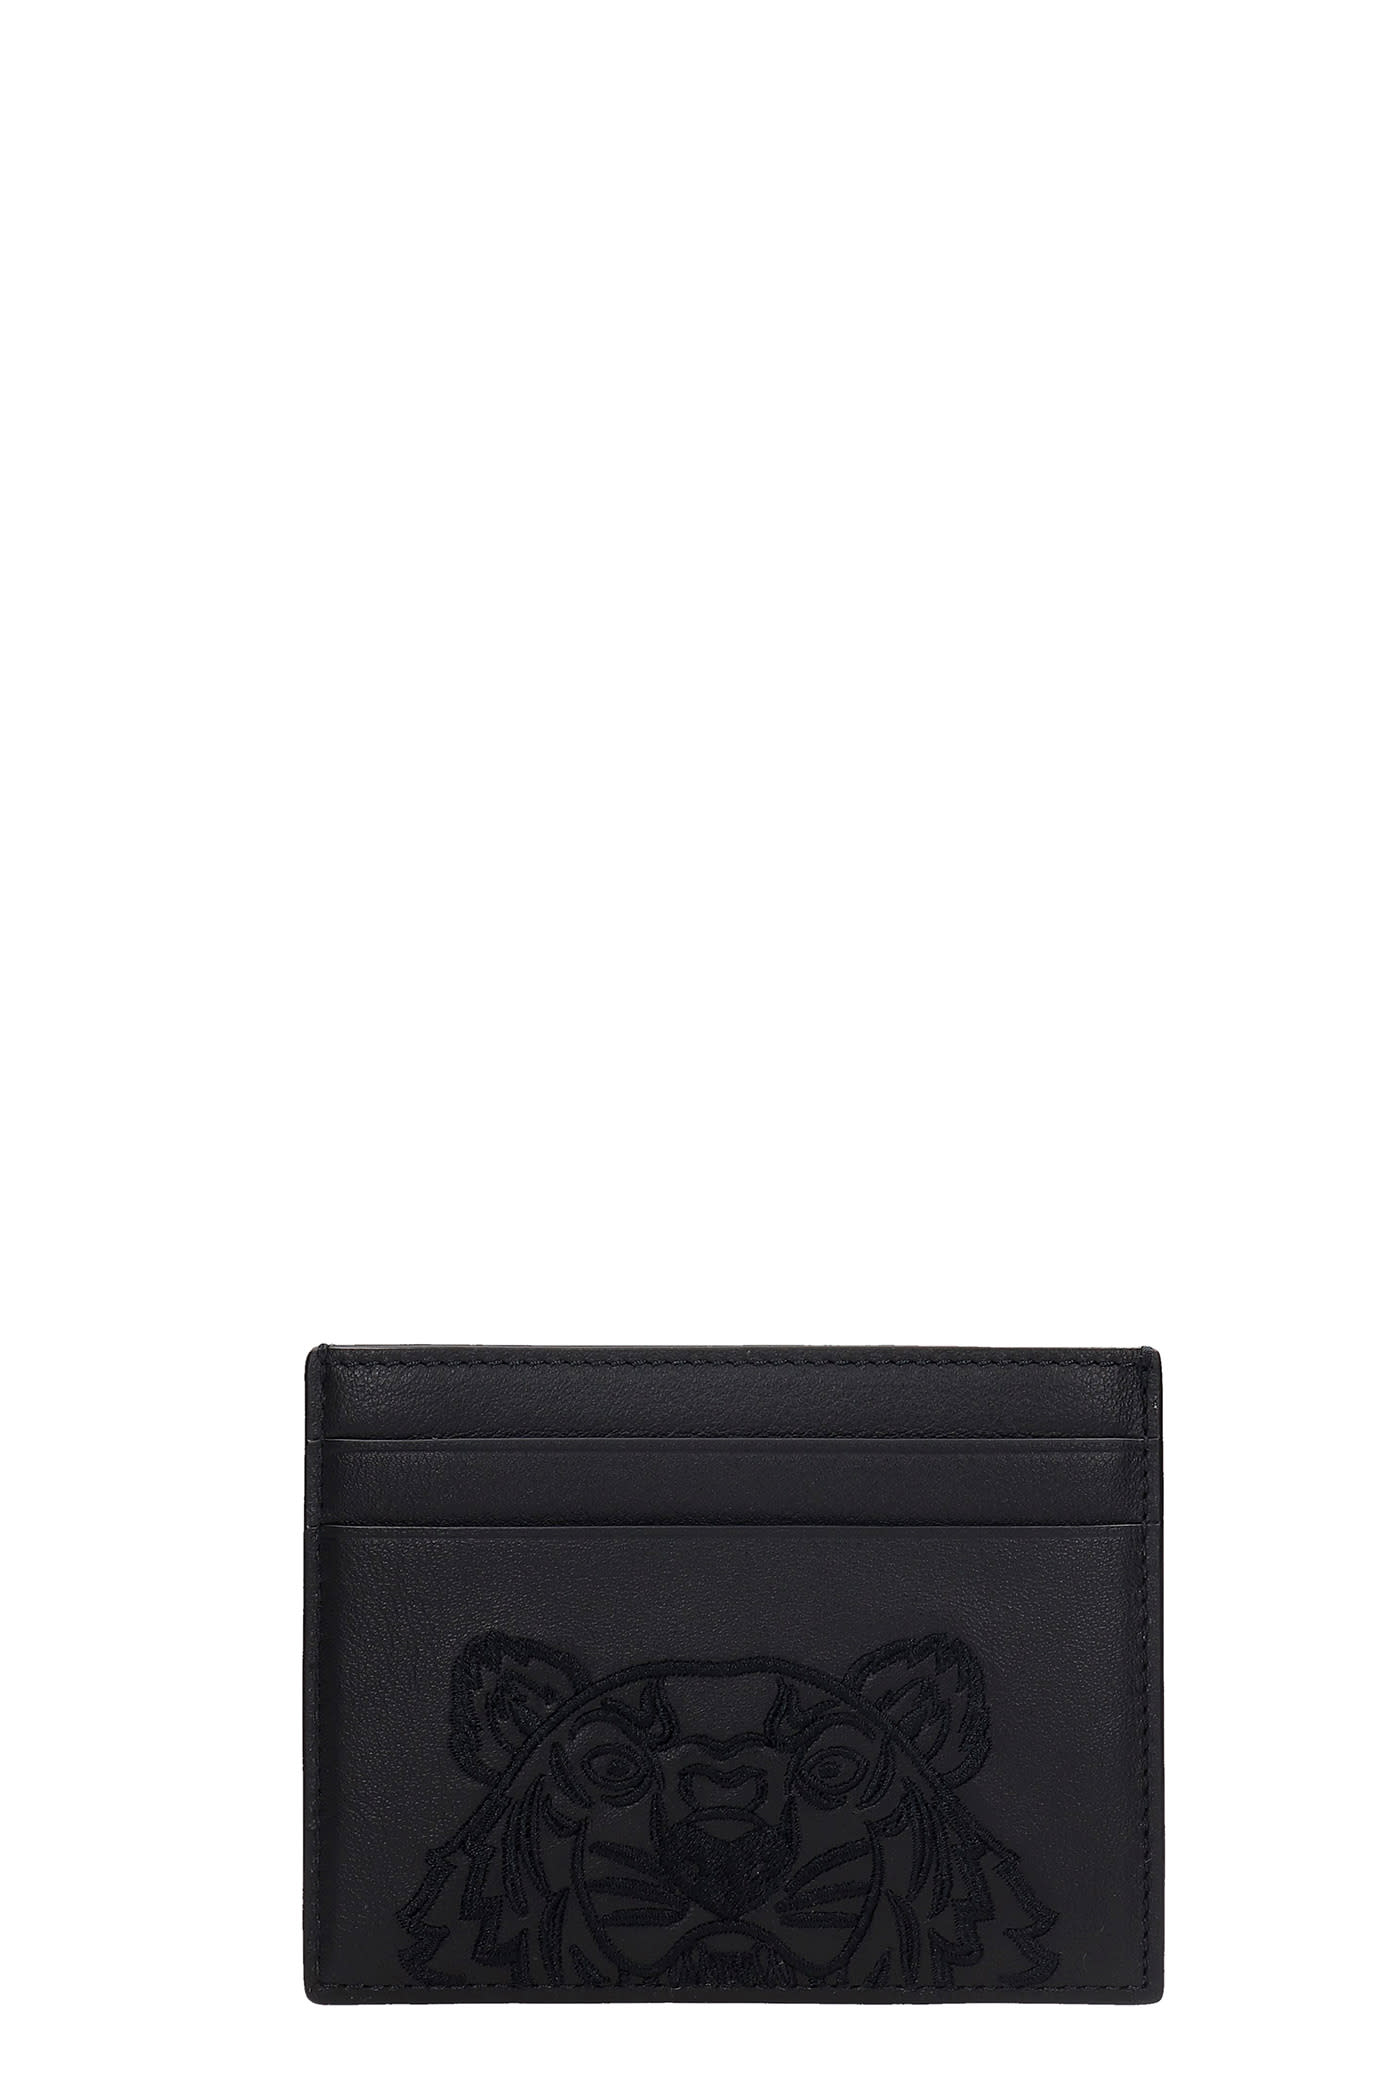 Kenzo Wallet In Black Leather